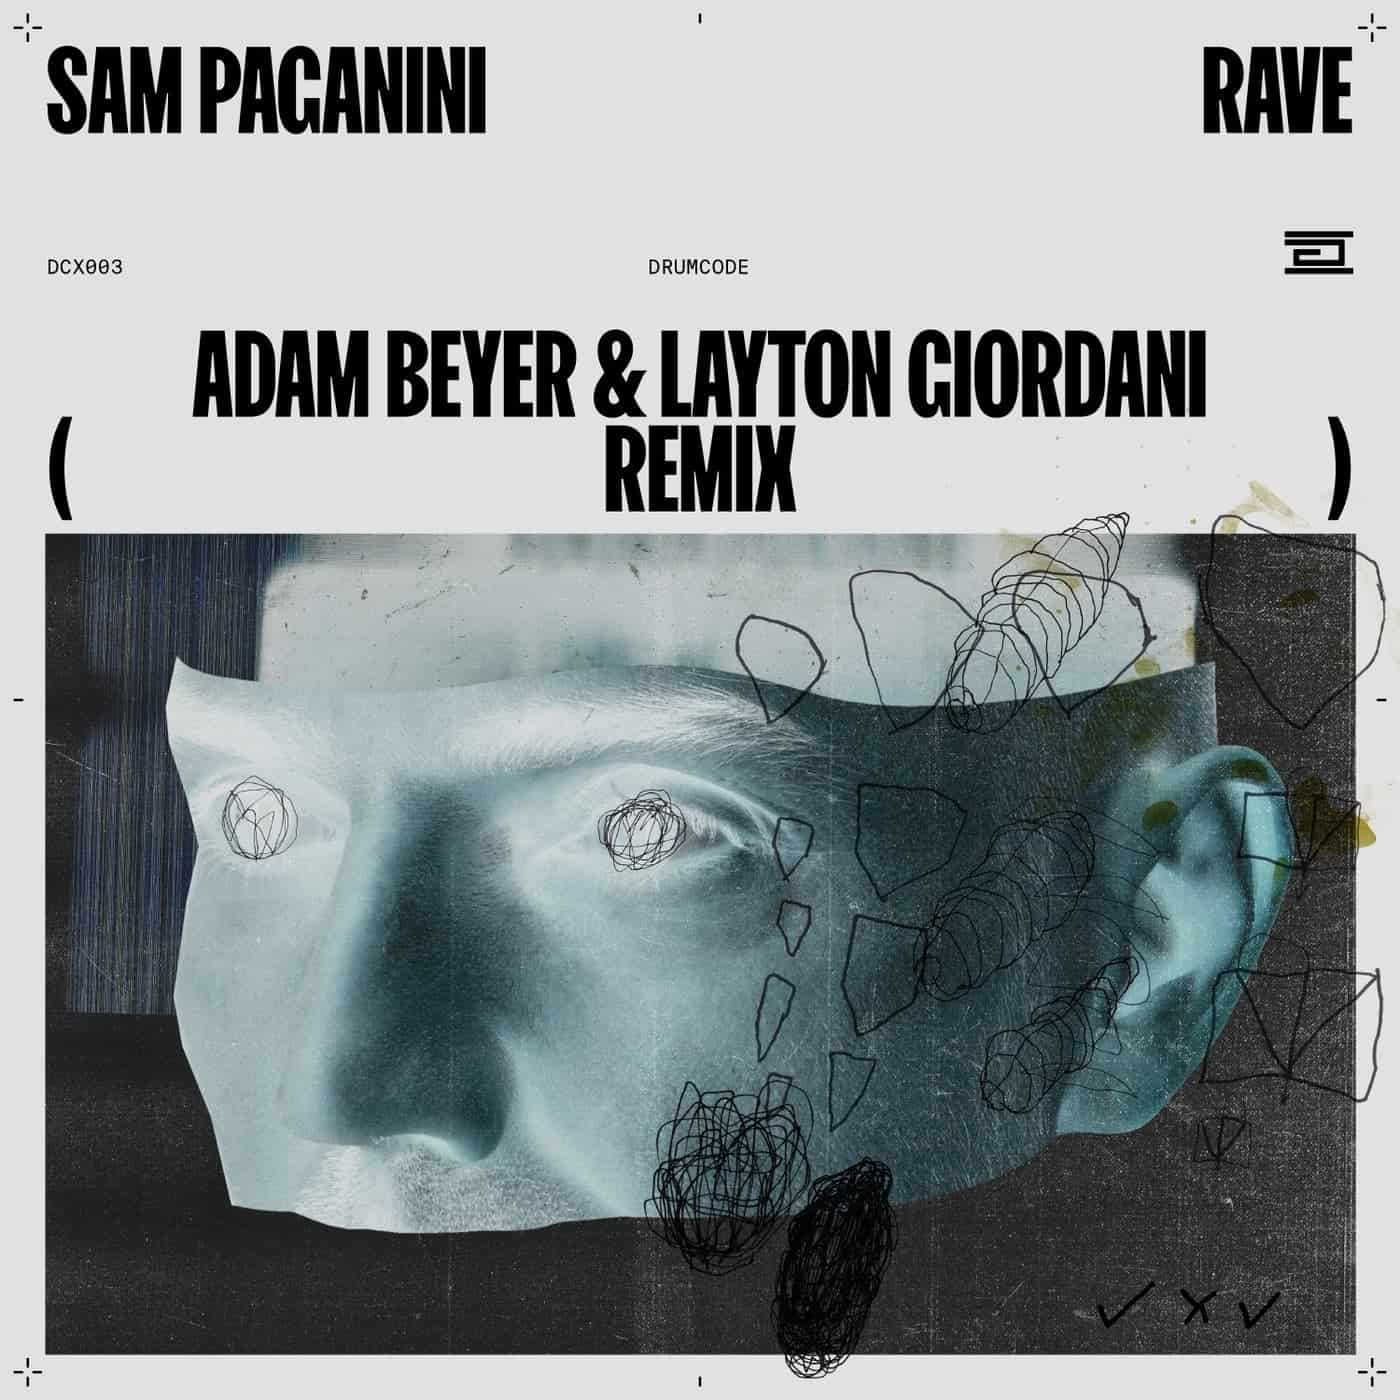 Download Sam Paganini - Rave (Adam Beyer & Layon Giordani Remix) on Electrobuzz